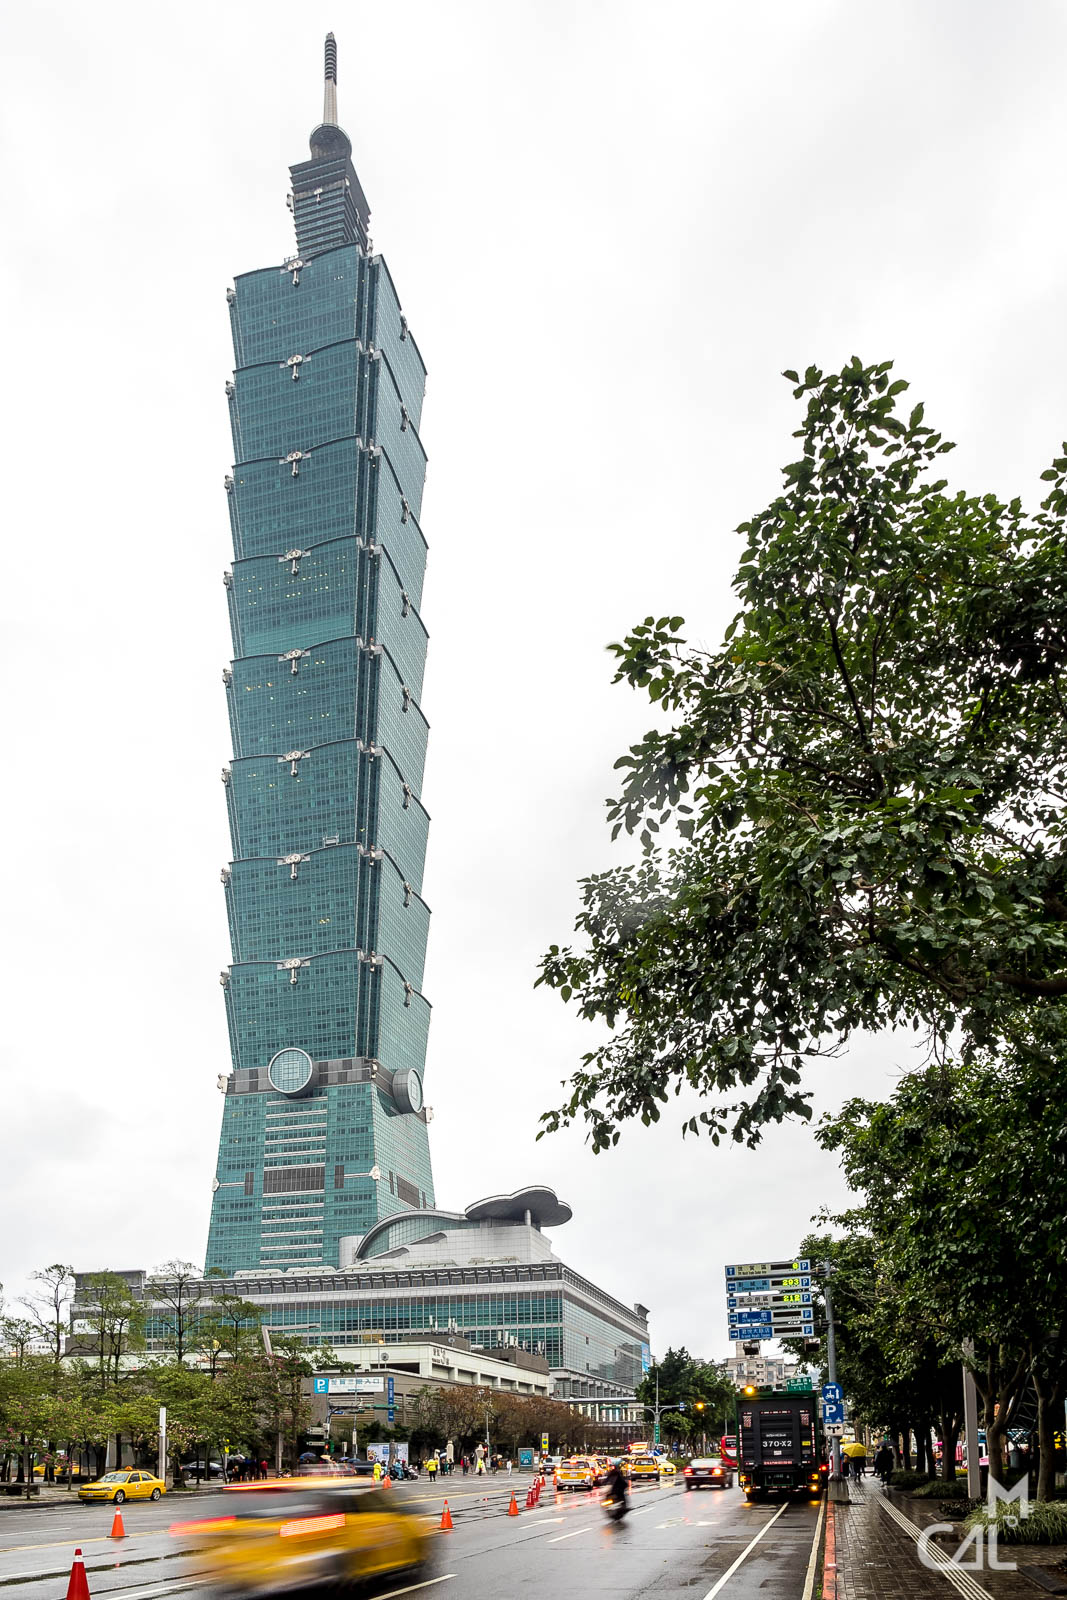 Taïwan Taipei Taipei 101 La Tour Culmine à 509 Mètres Mon Chat